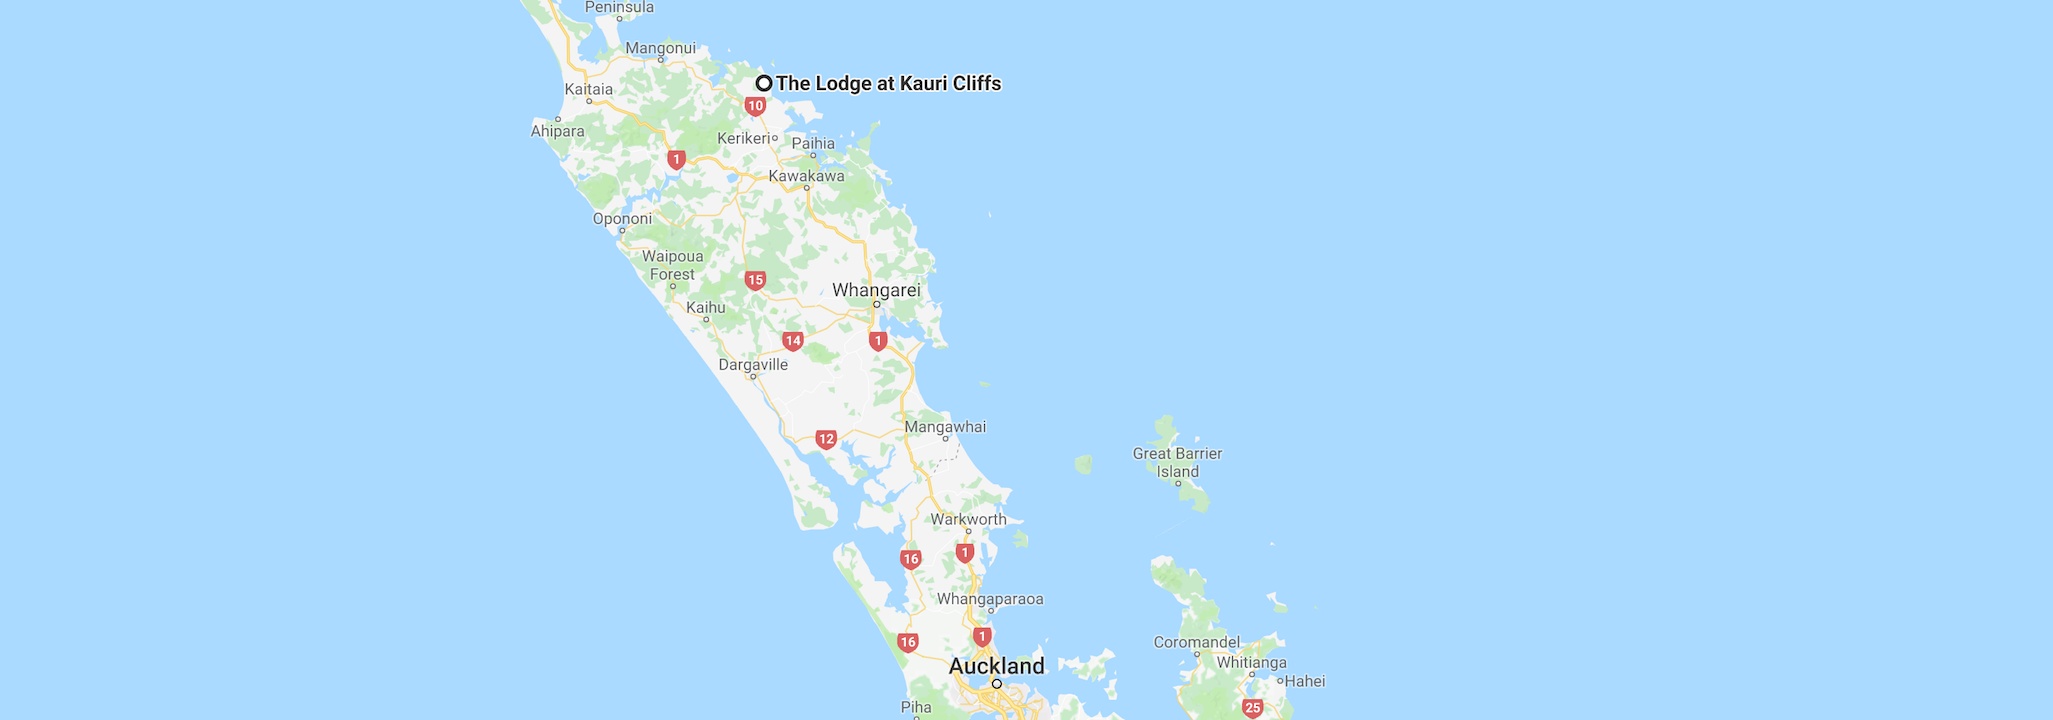 Robertson luxurious Lodges Kauri Cliffs , Matauri Bay Northland / New Zealand